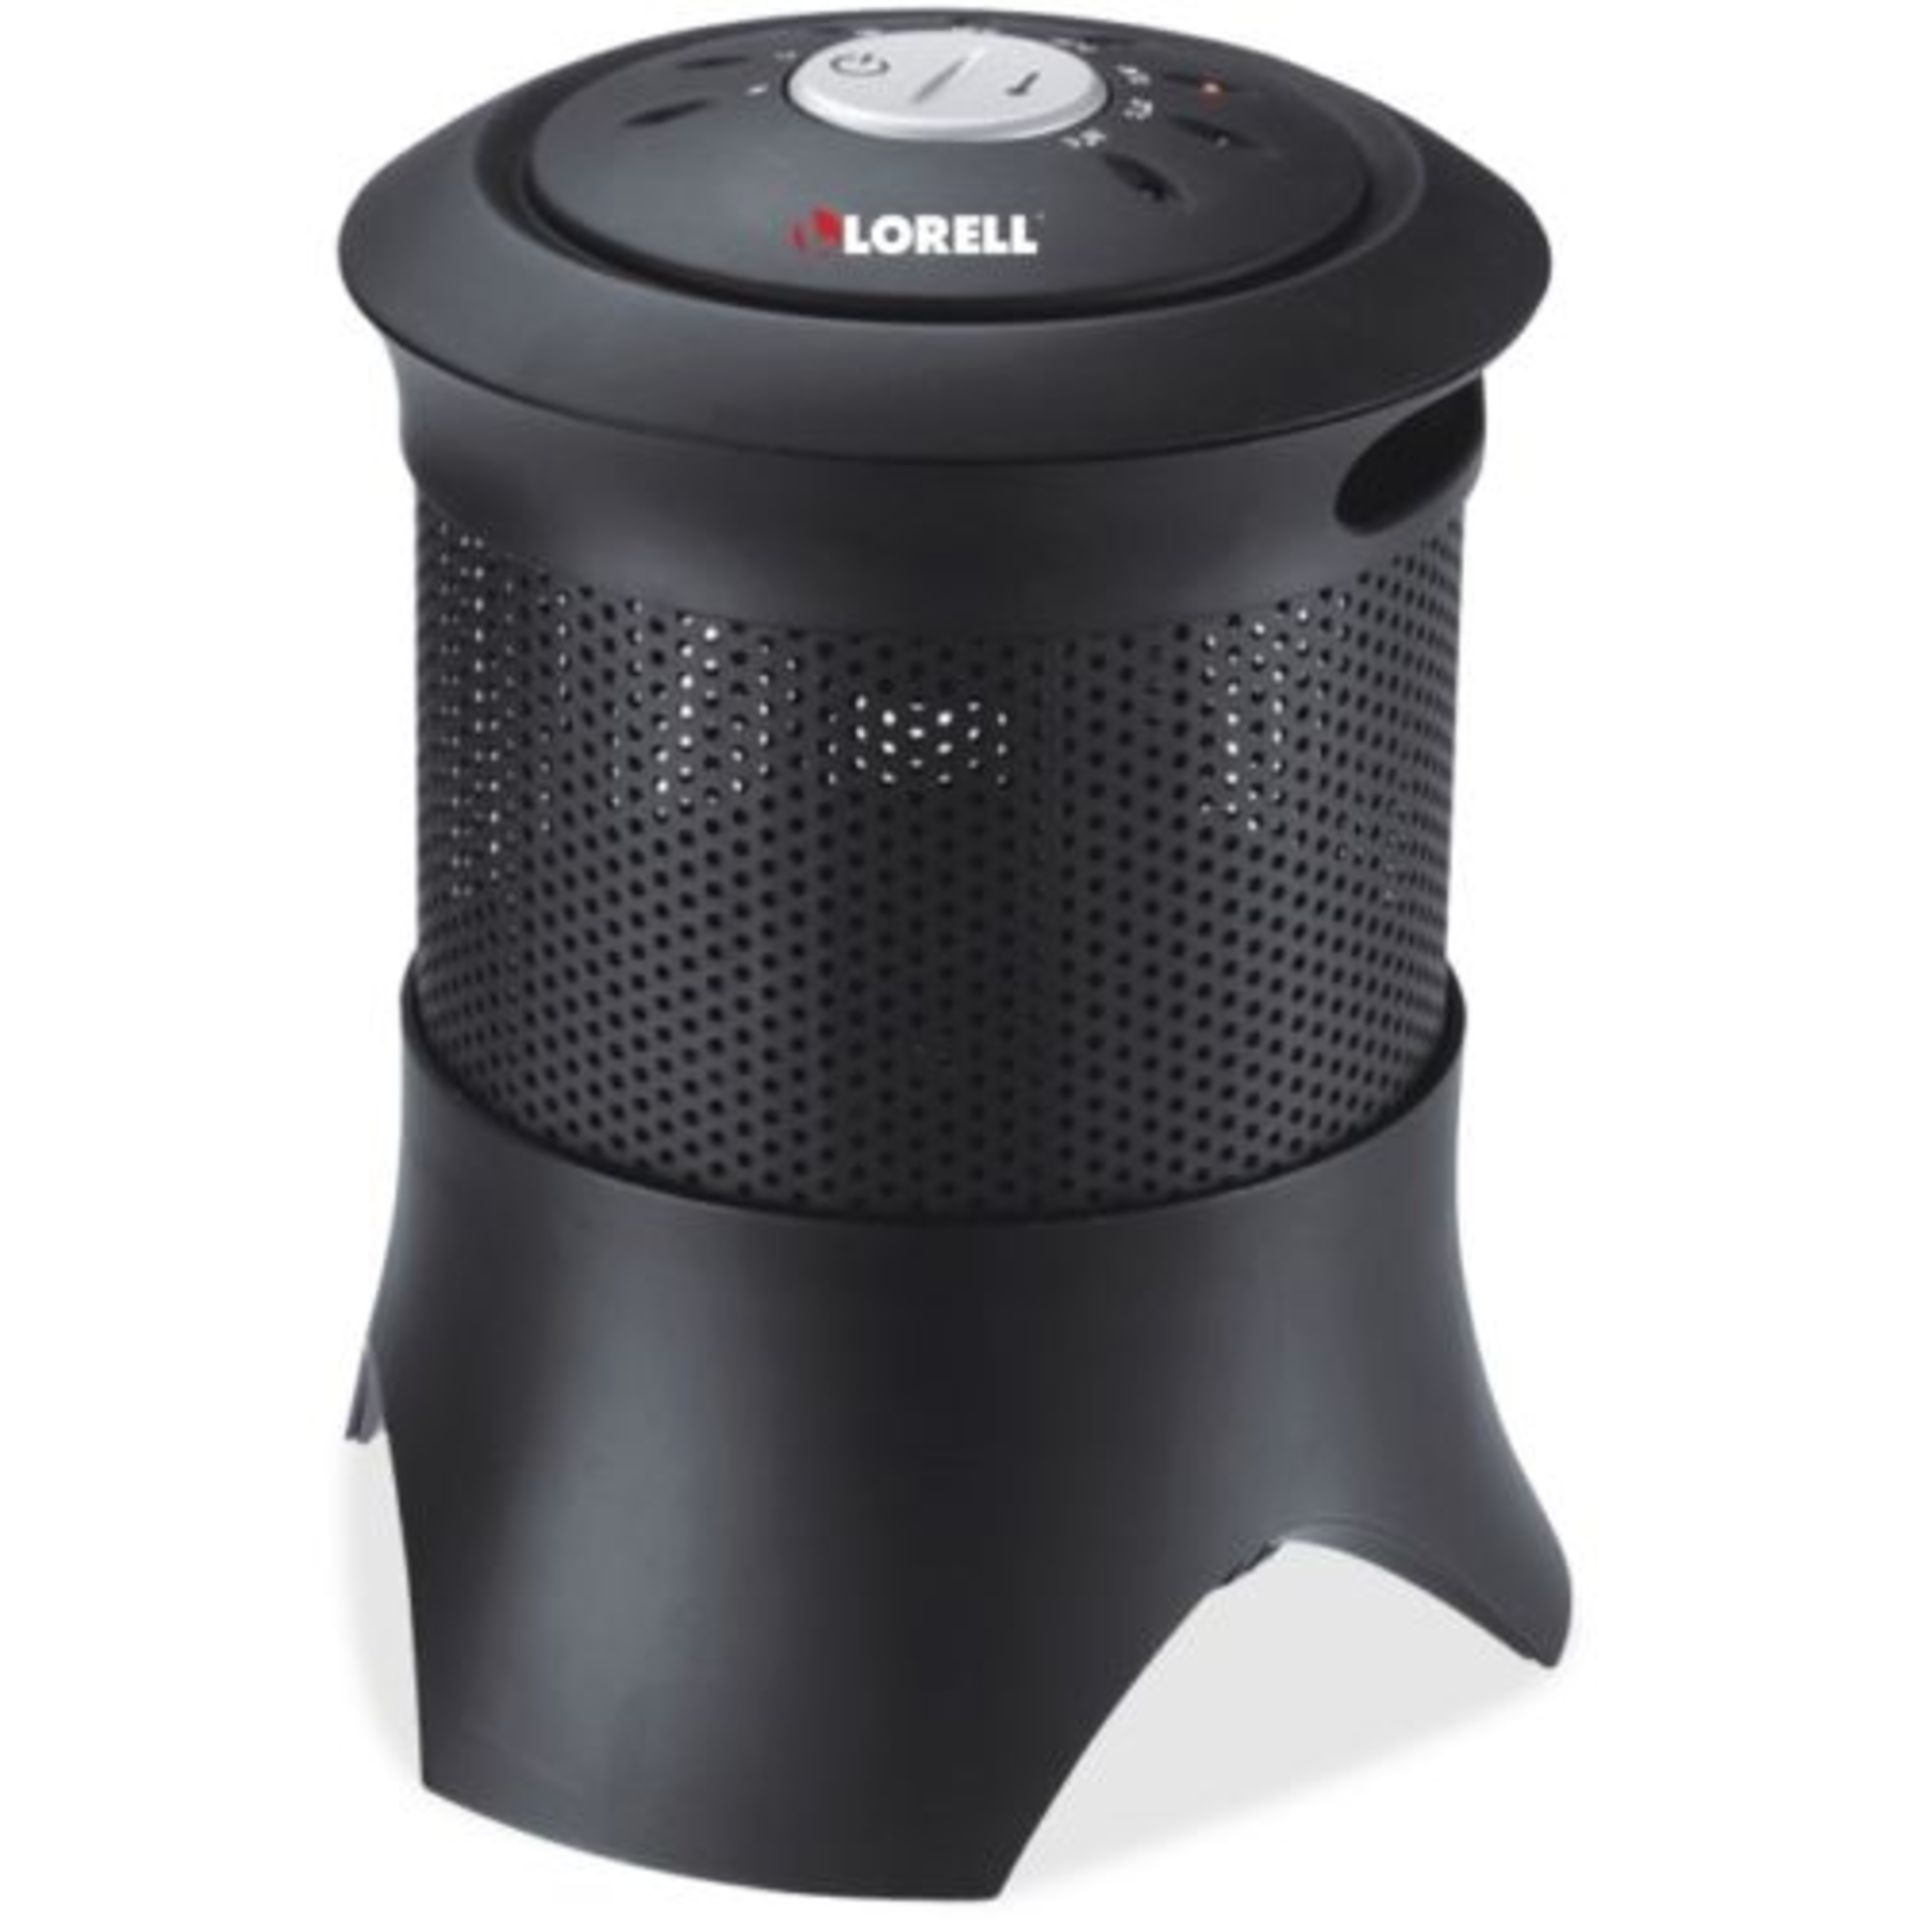 NEW Lorell Surround Heater 33989 Ceramic - 1500 W - 3 x Heat Settings - Black